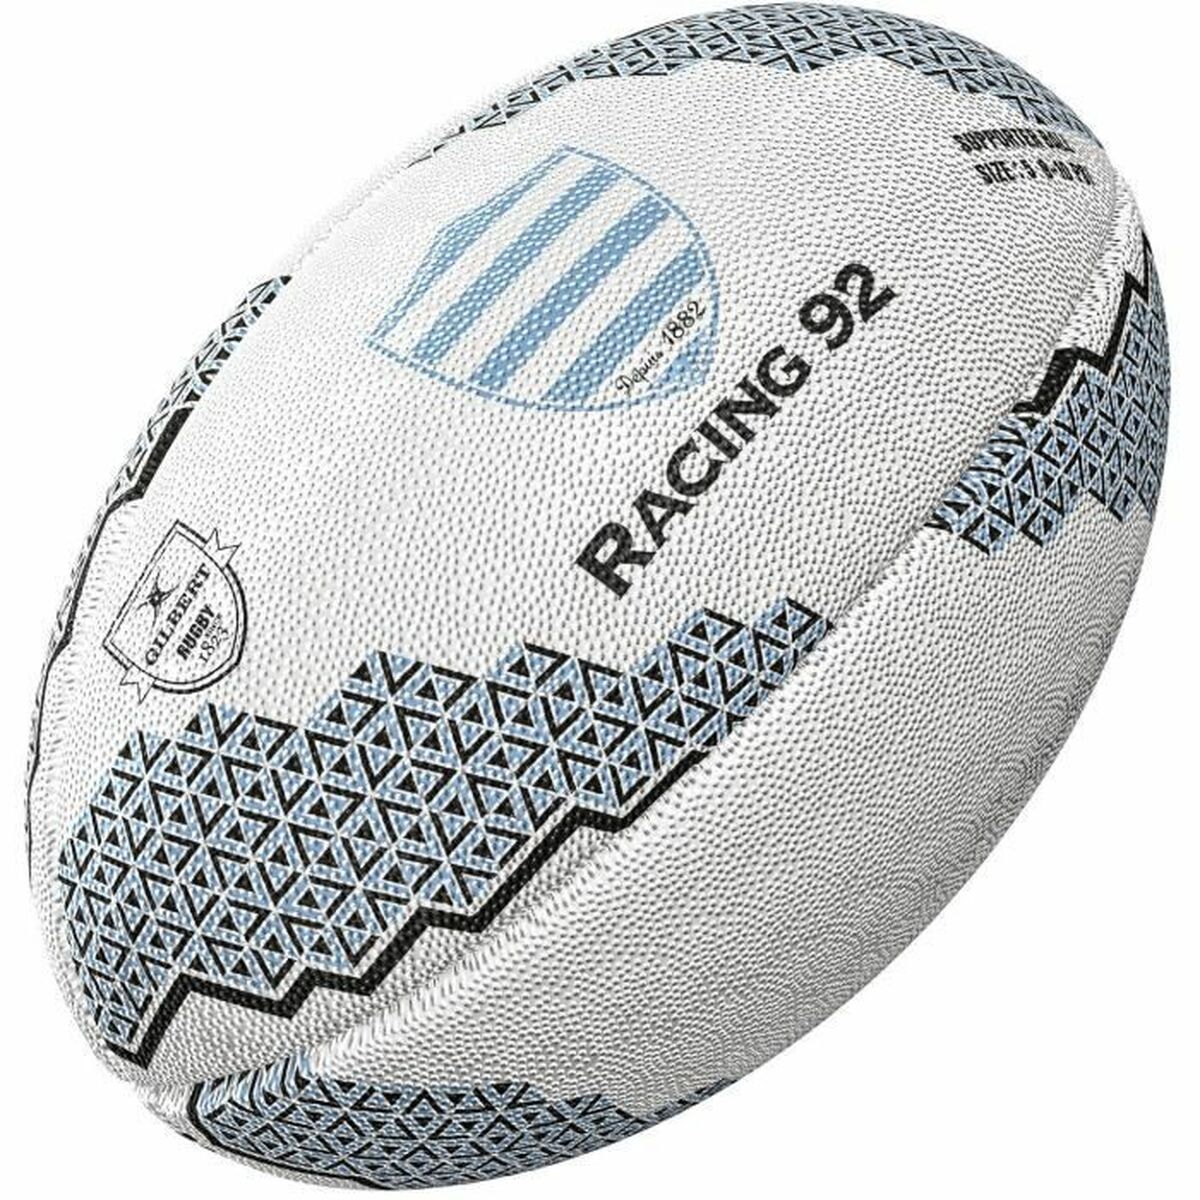 Ballon de Rugby Gilbert Racing 92 Multicouleur